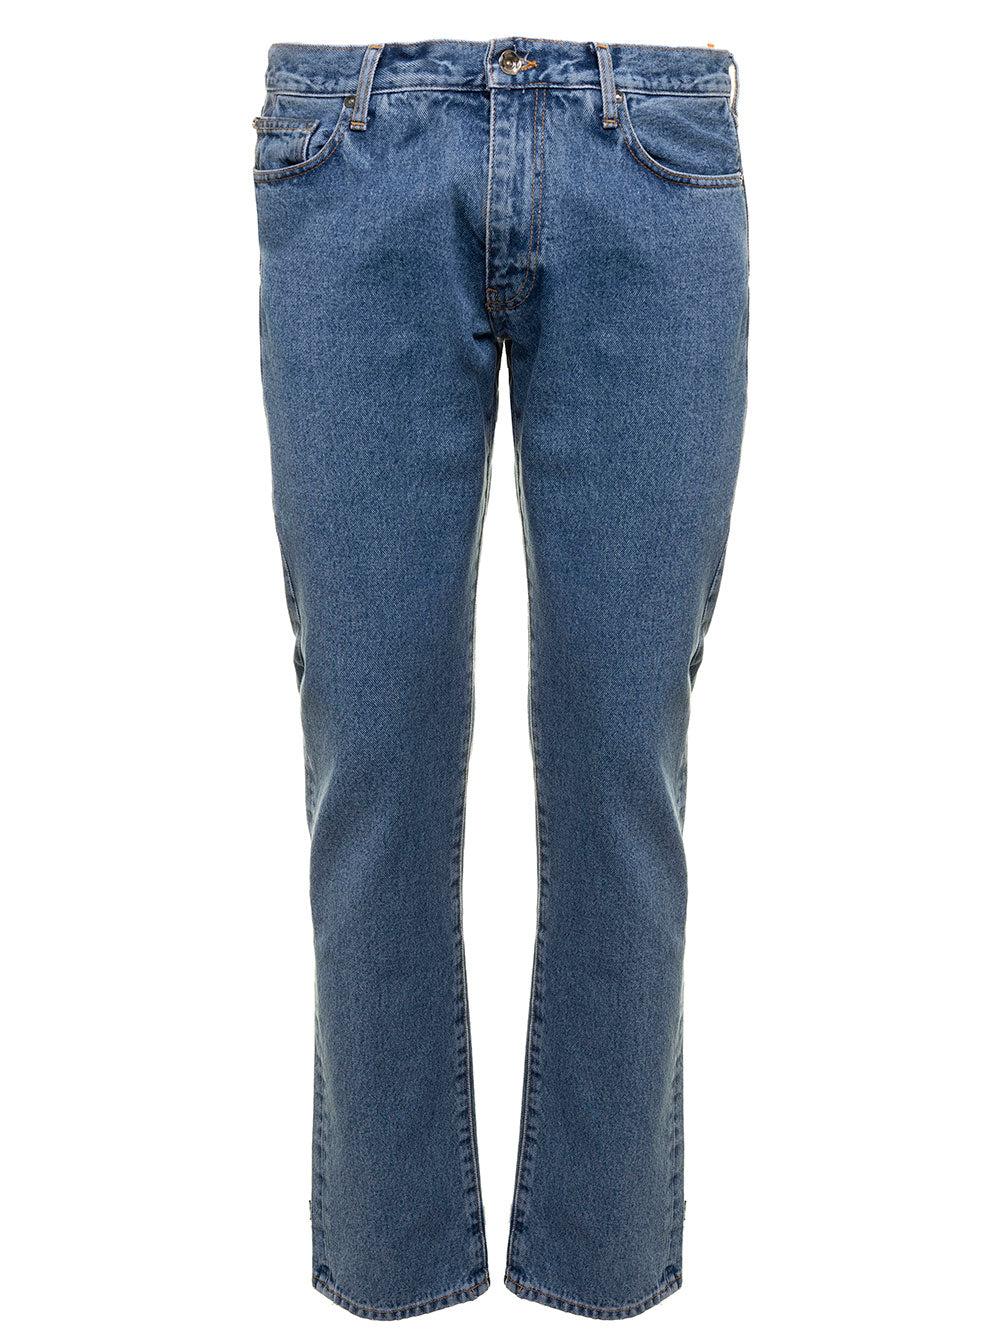 Off-White c/o Virgil Abloh Denim Slim-fit Printed Jeans in Blue for Men Mens Clothing Jeans Slim jeans 